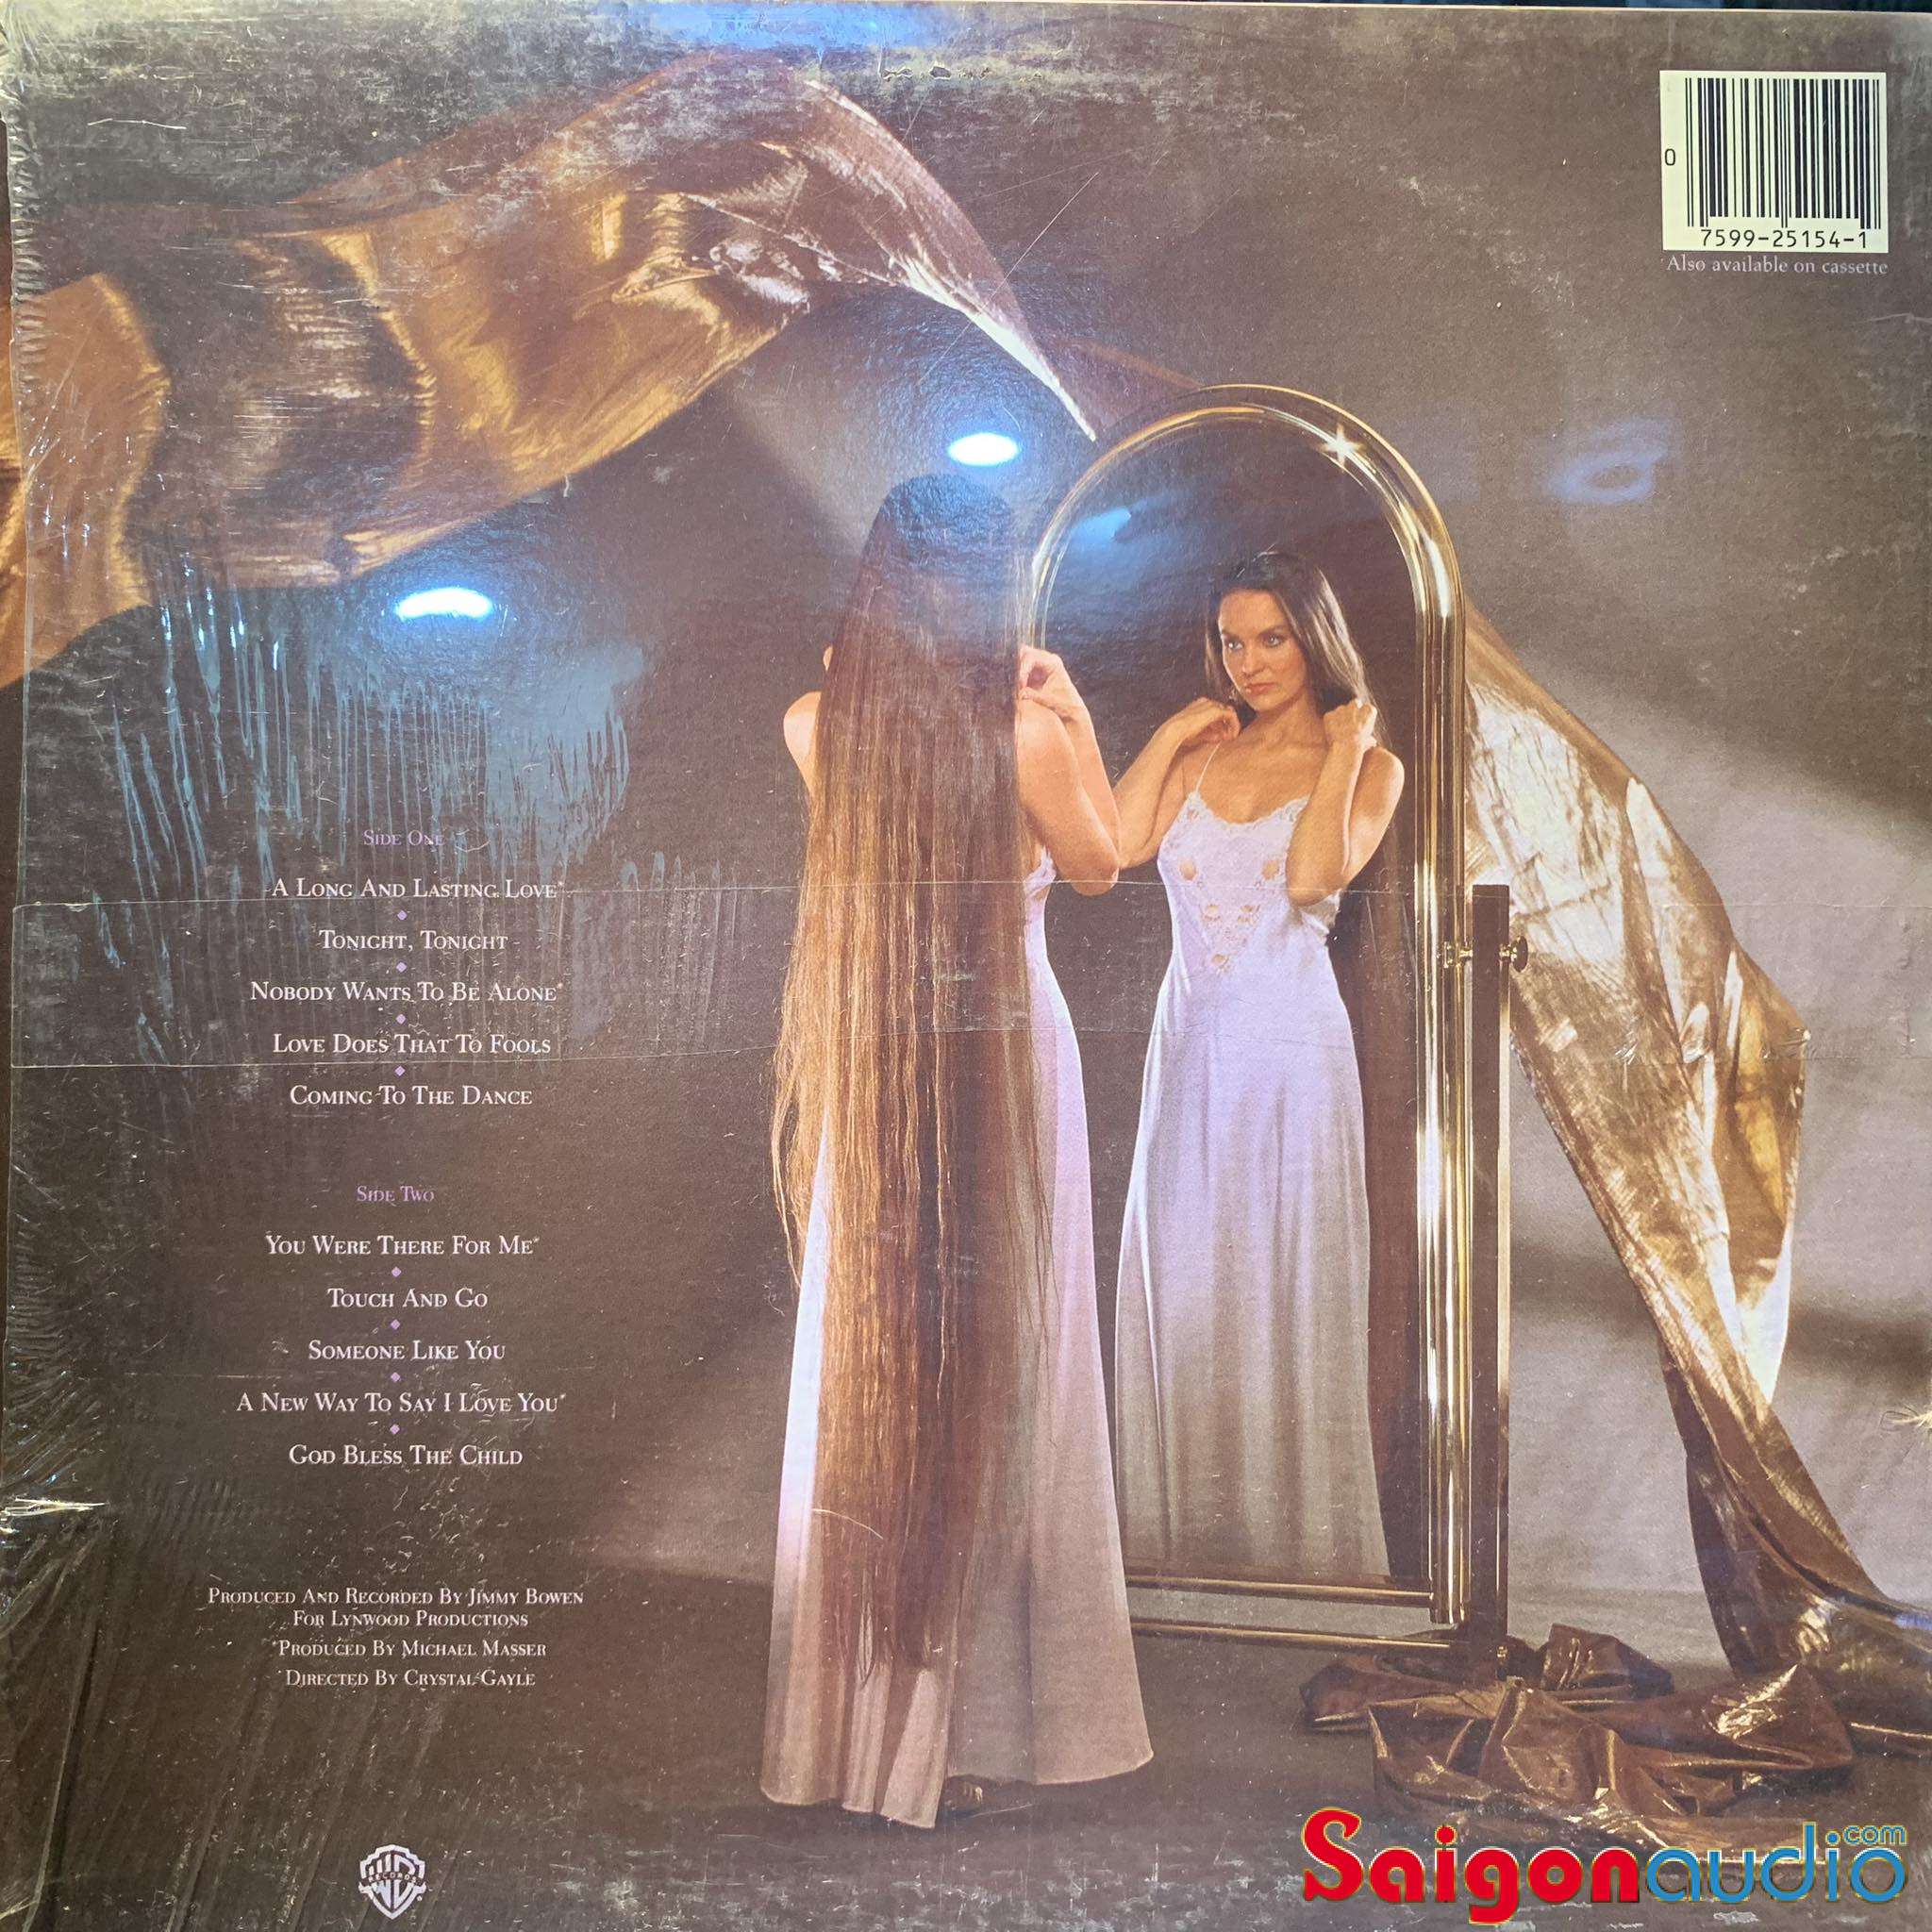 Đĩa than Crystal Gayle – Nobody Wants To Be Alone | LP Vinyl Records